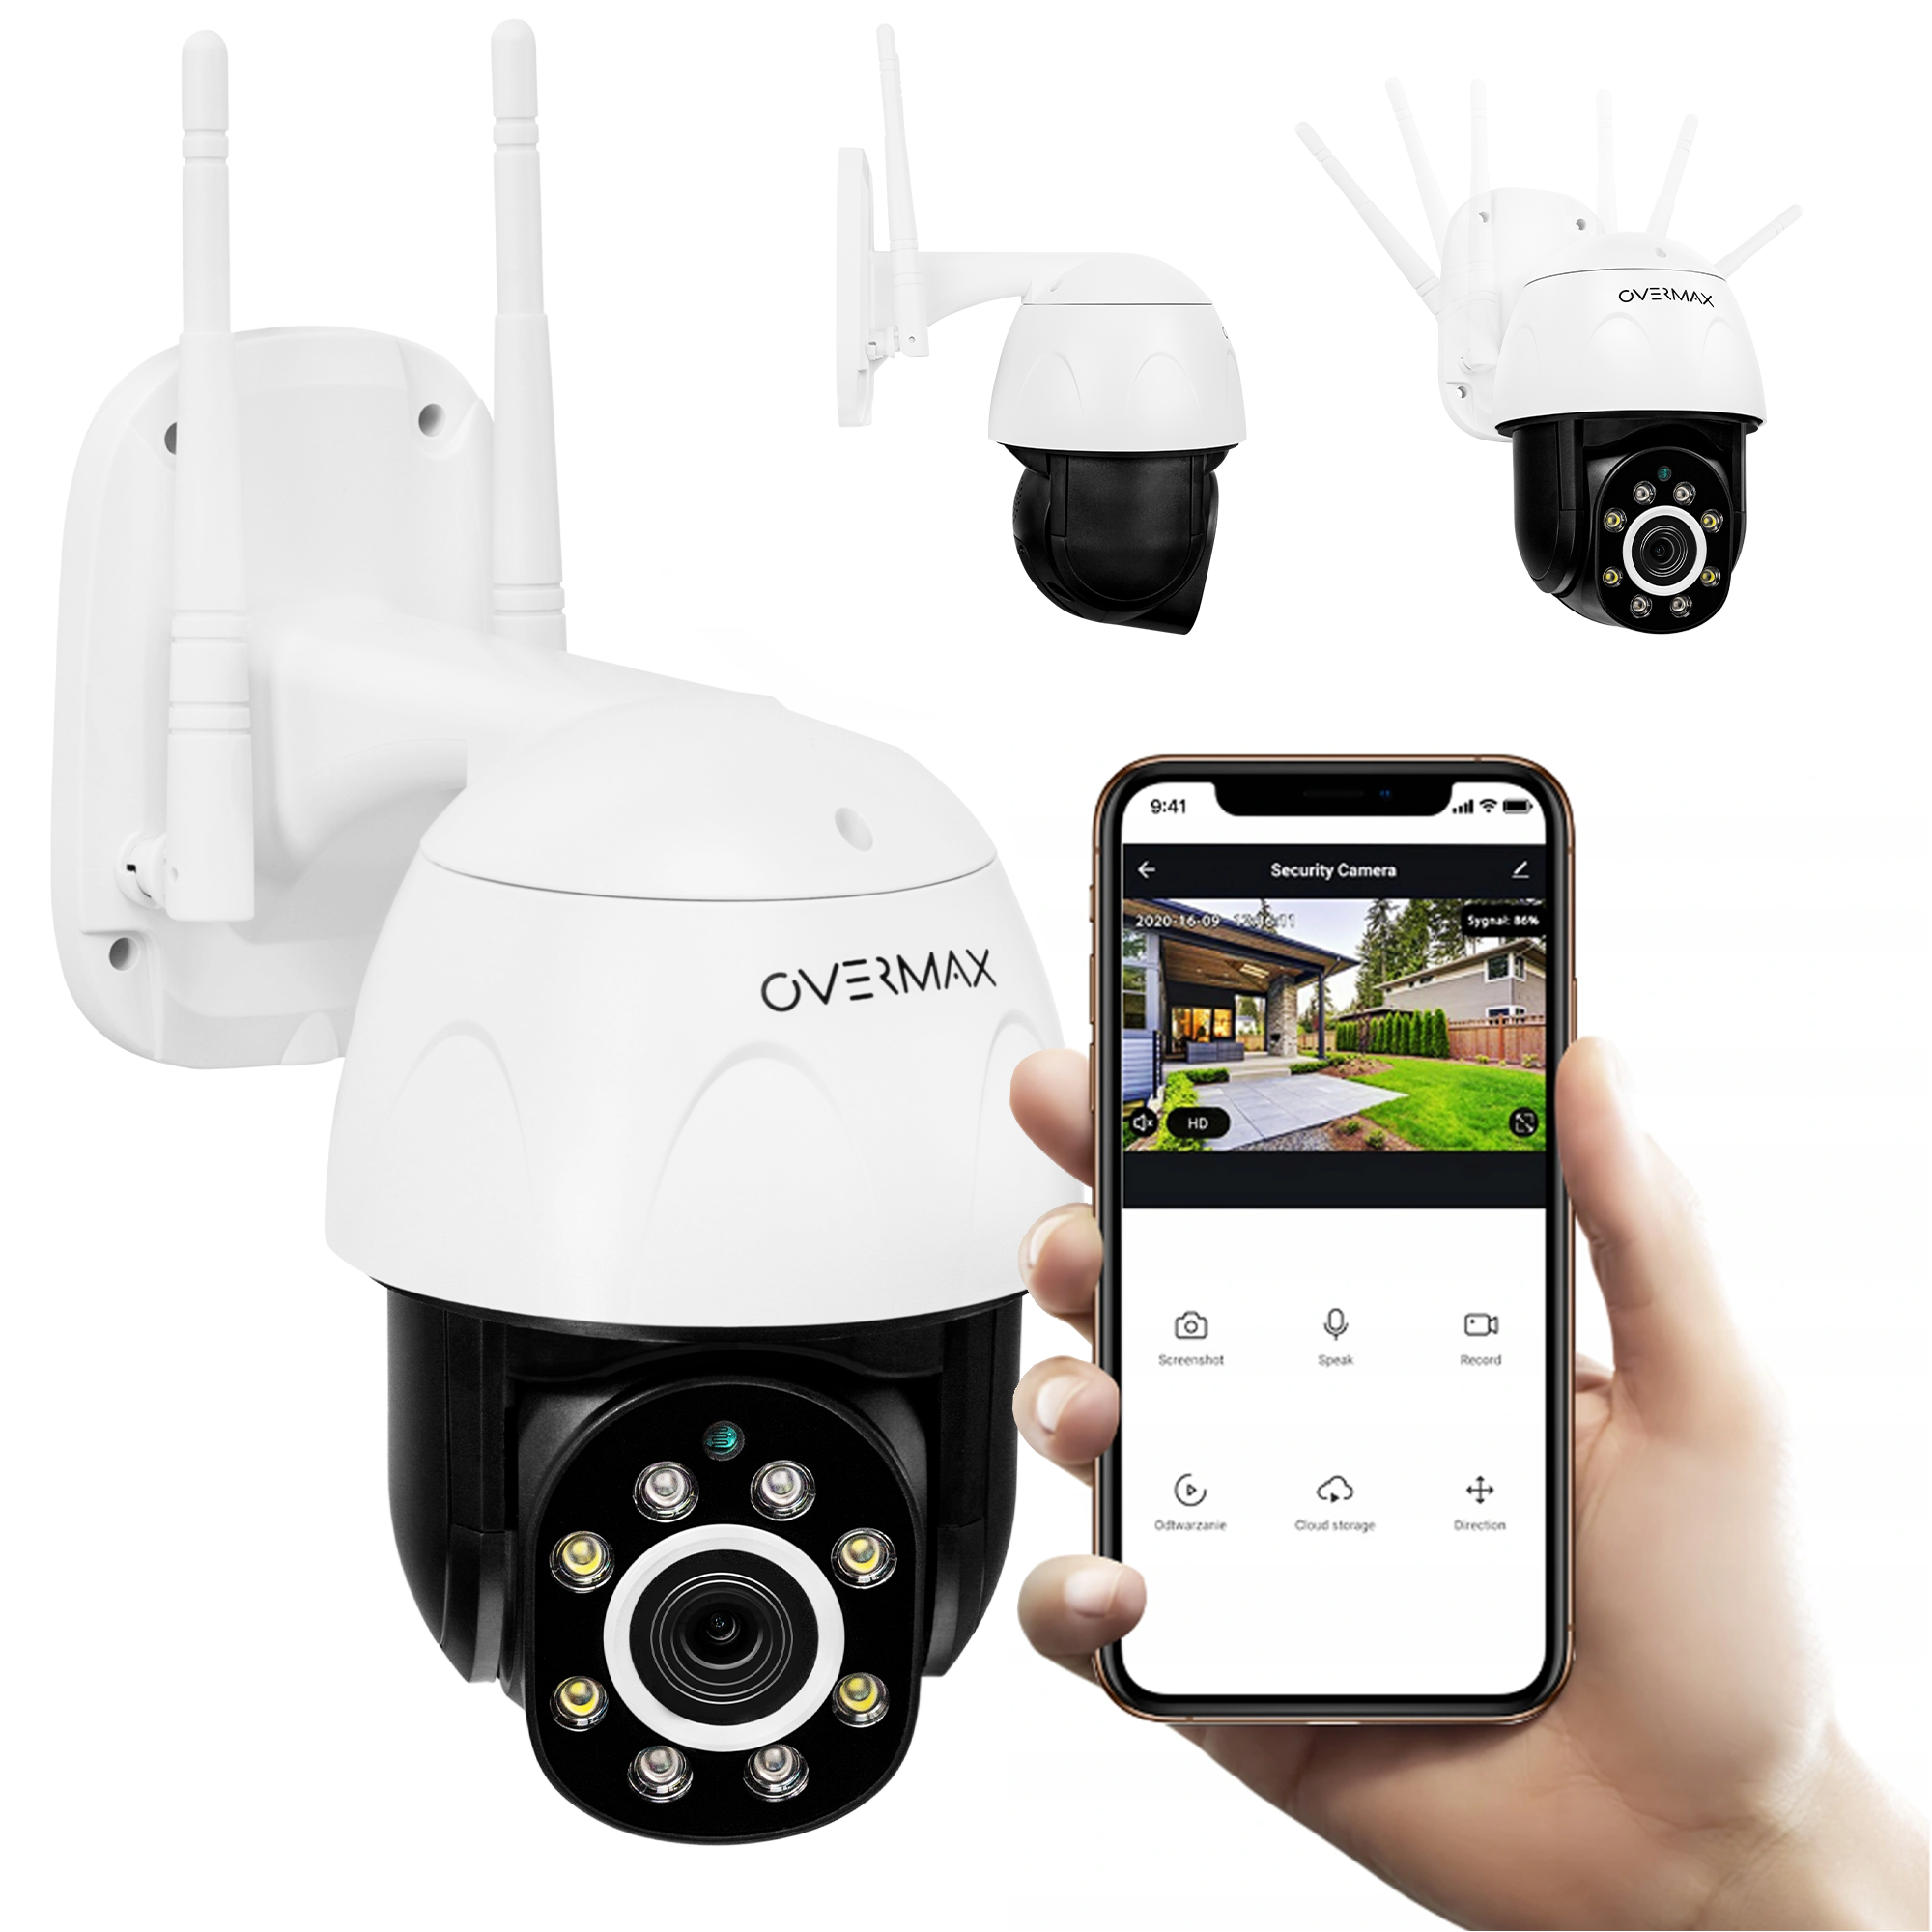 px - OVERMAX Auflösung 4.9 Camspot Überwachungskamera, Pro, x 2.5K 1288 2288 Video: